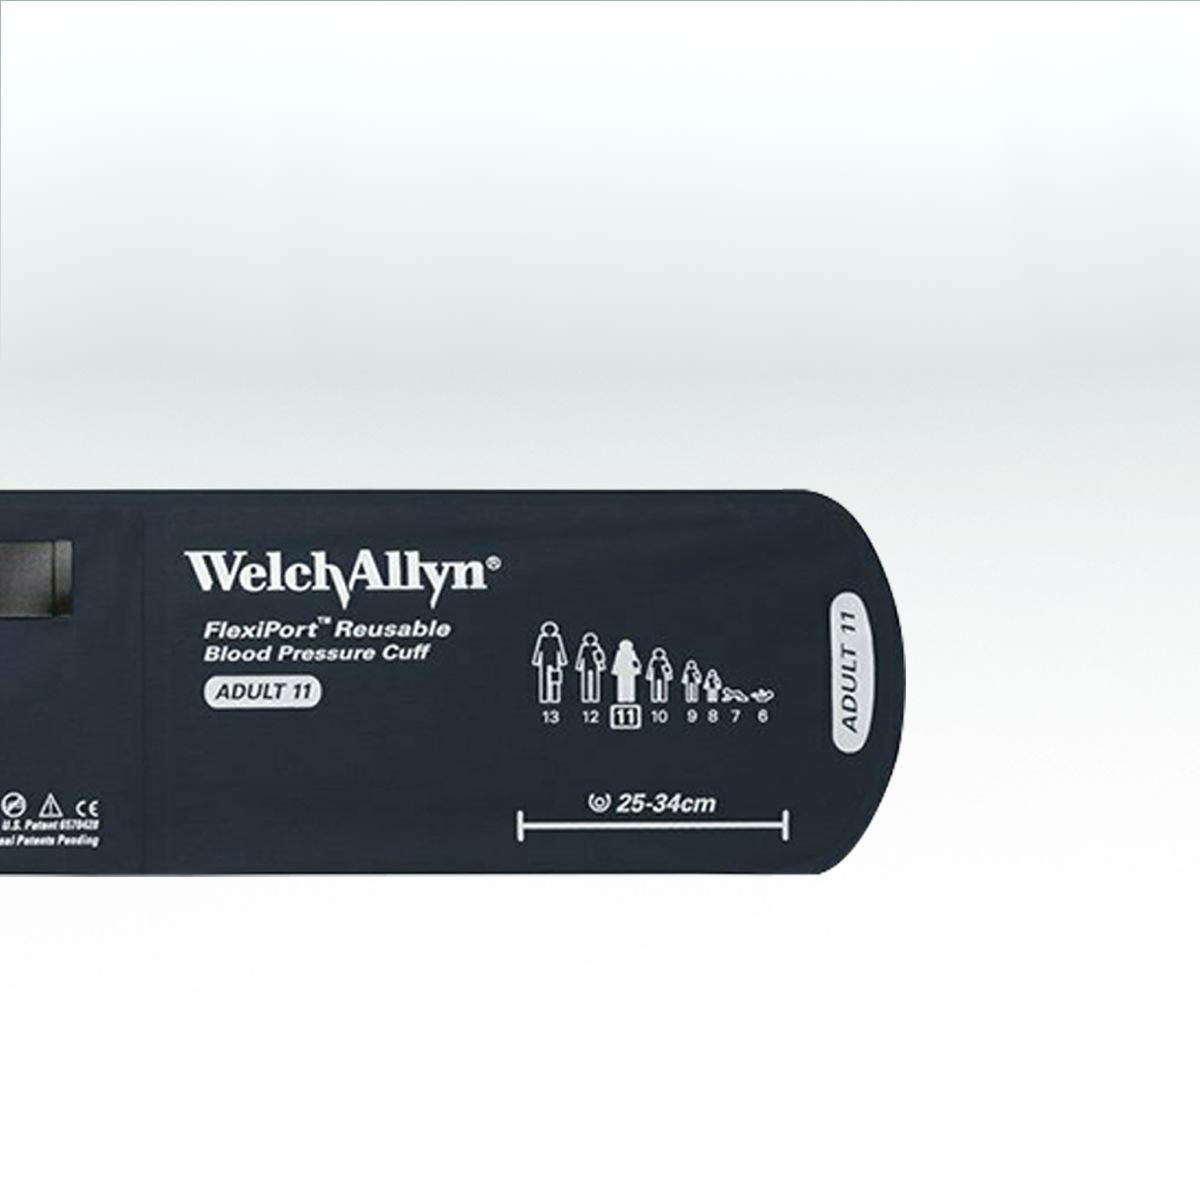 Welch Allyn blood pressure meter cuff blood pressure inflation cuff REUSE-11 2